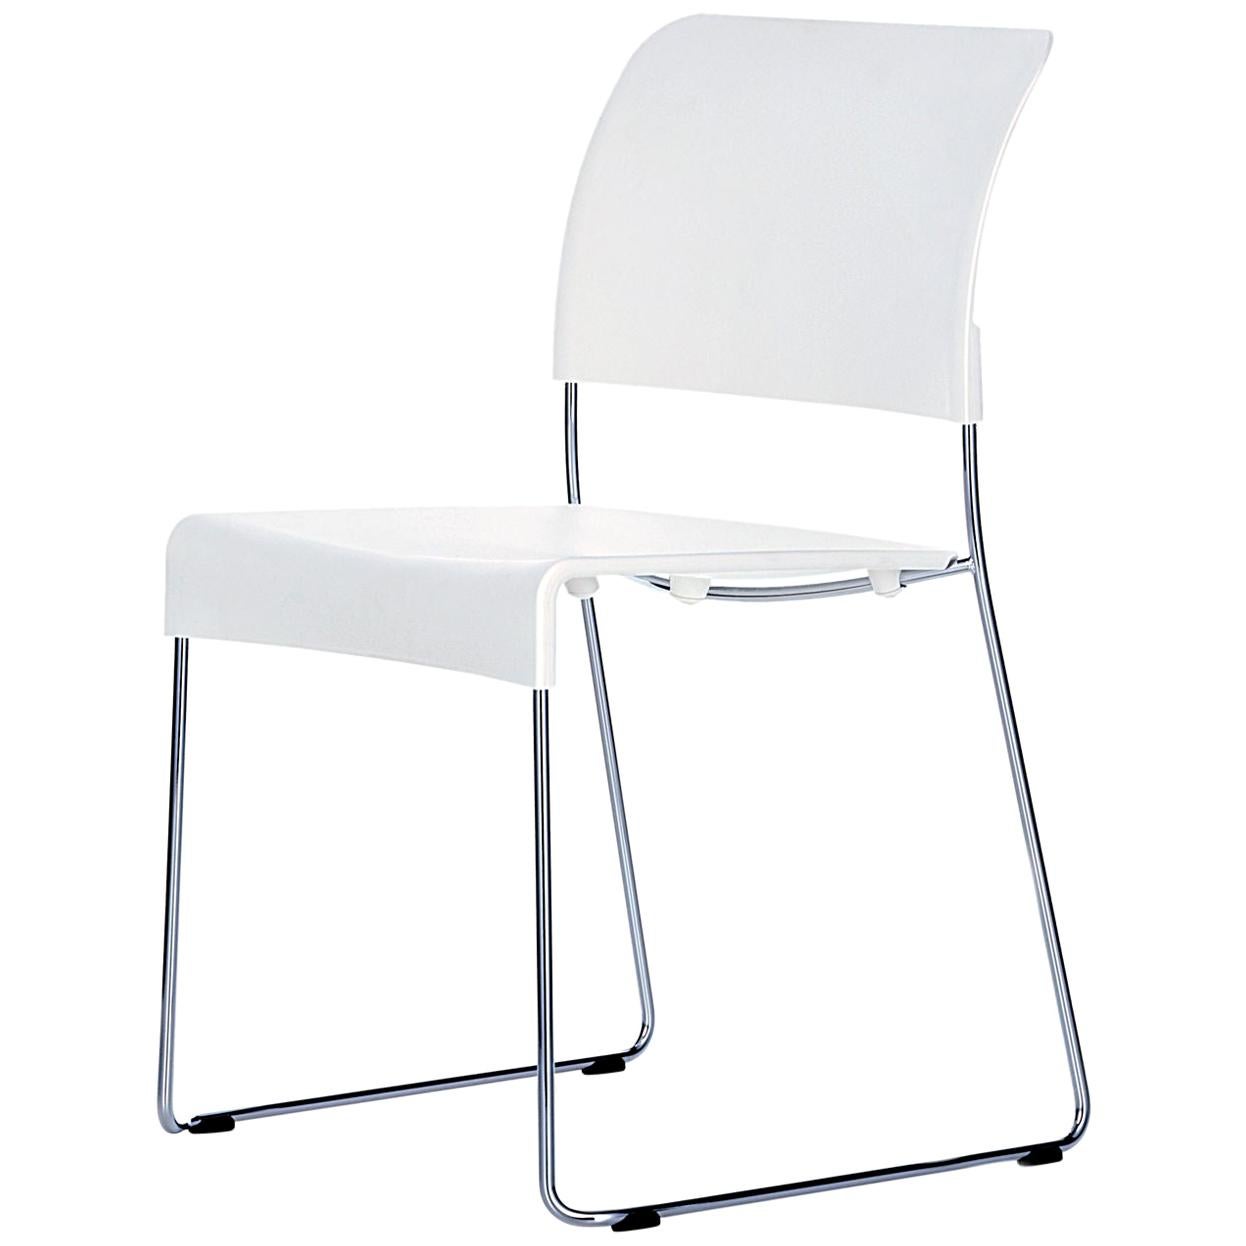 Jasper Morrison Sim Chair by Vitra